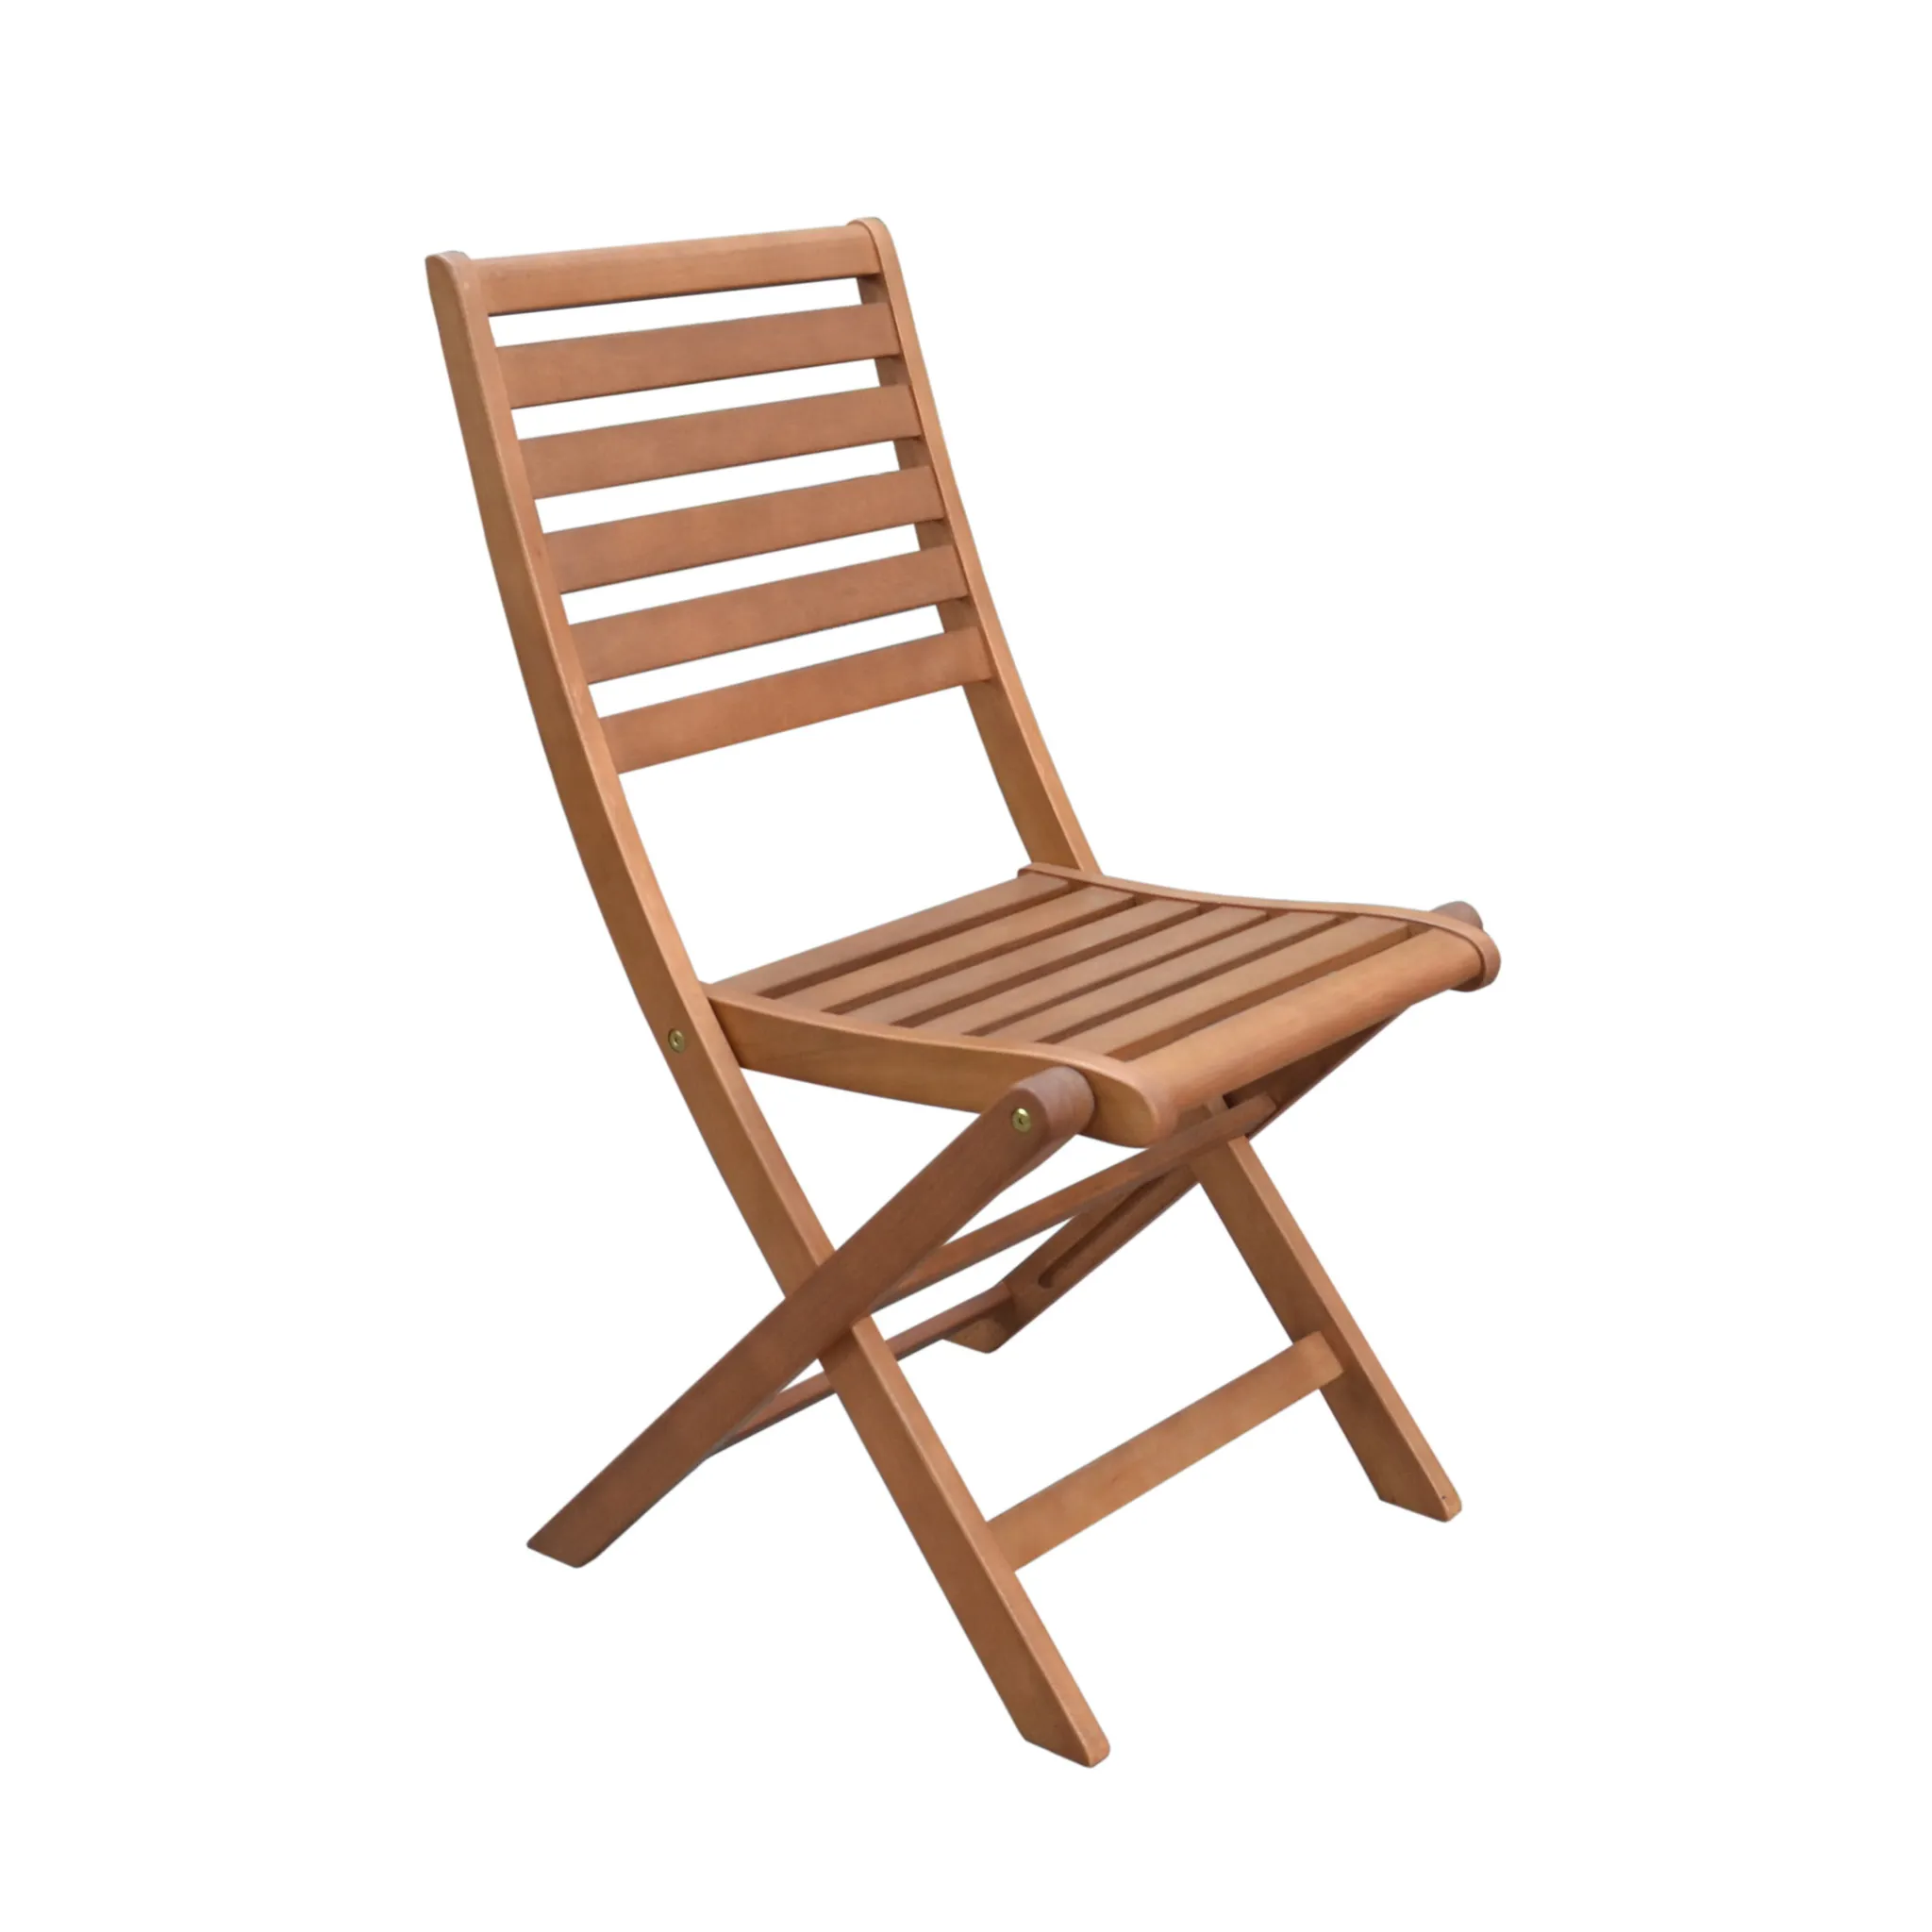 VILLACH Stuhl Klappstuhl aus Eukalyptusholz | Klappstühle